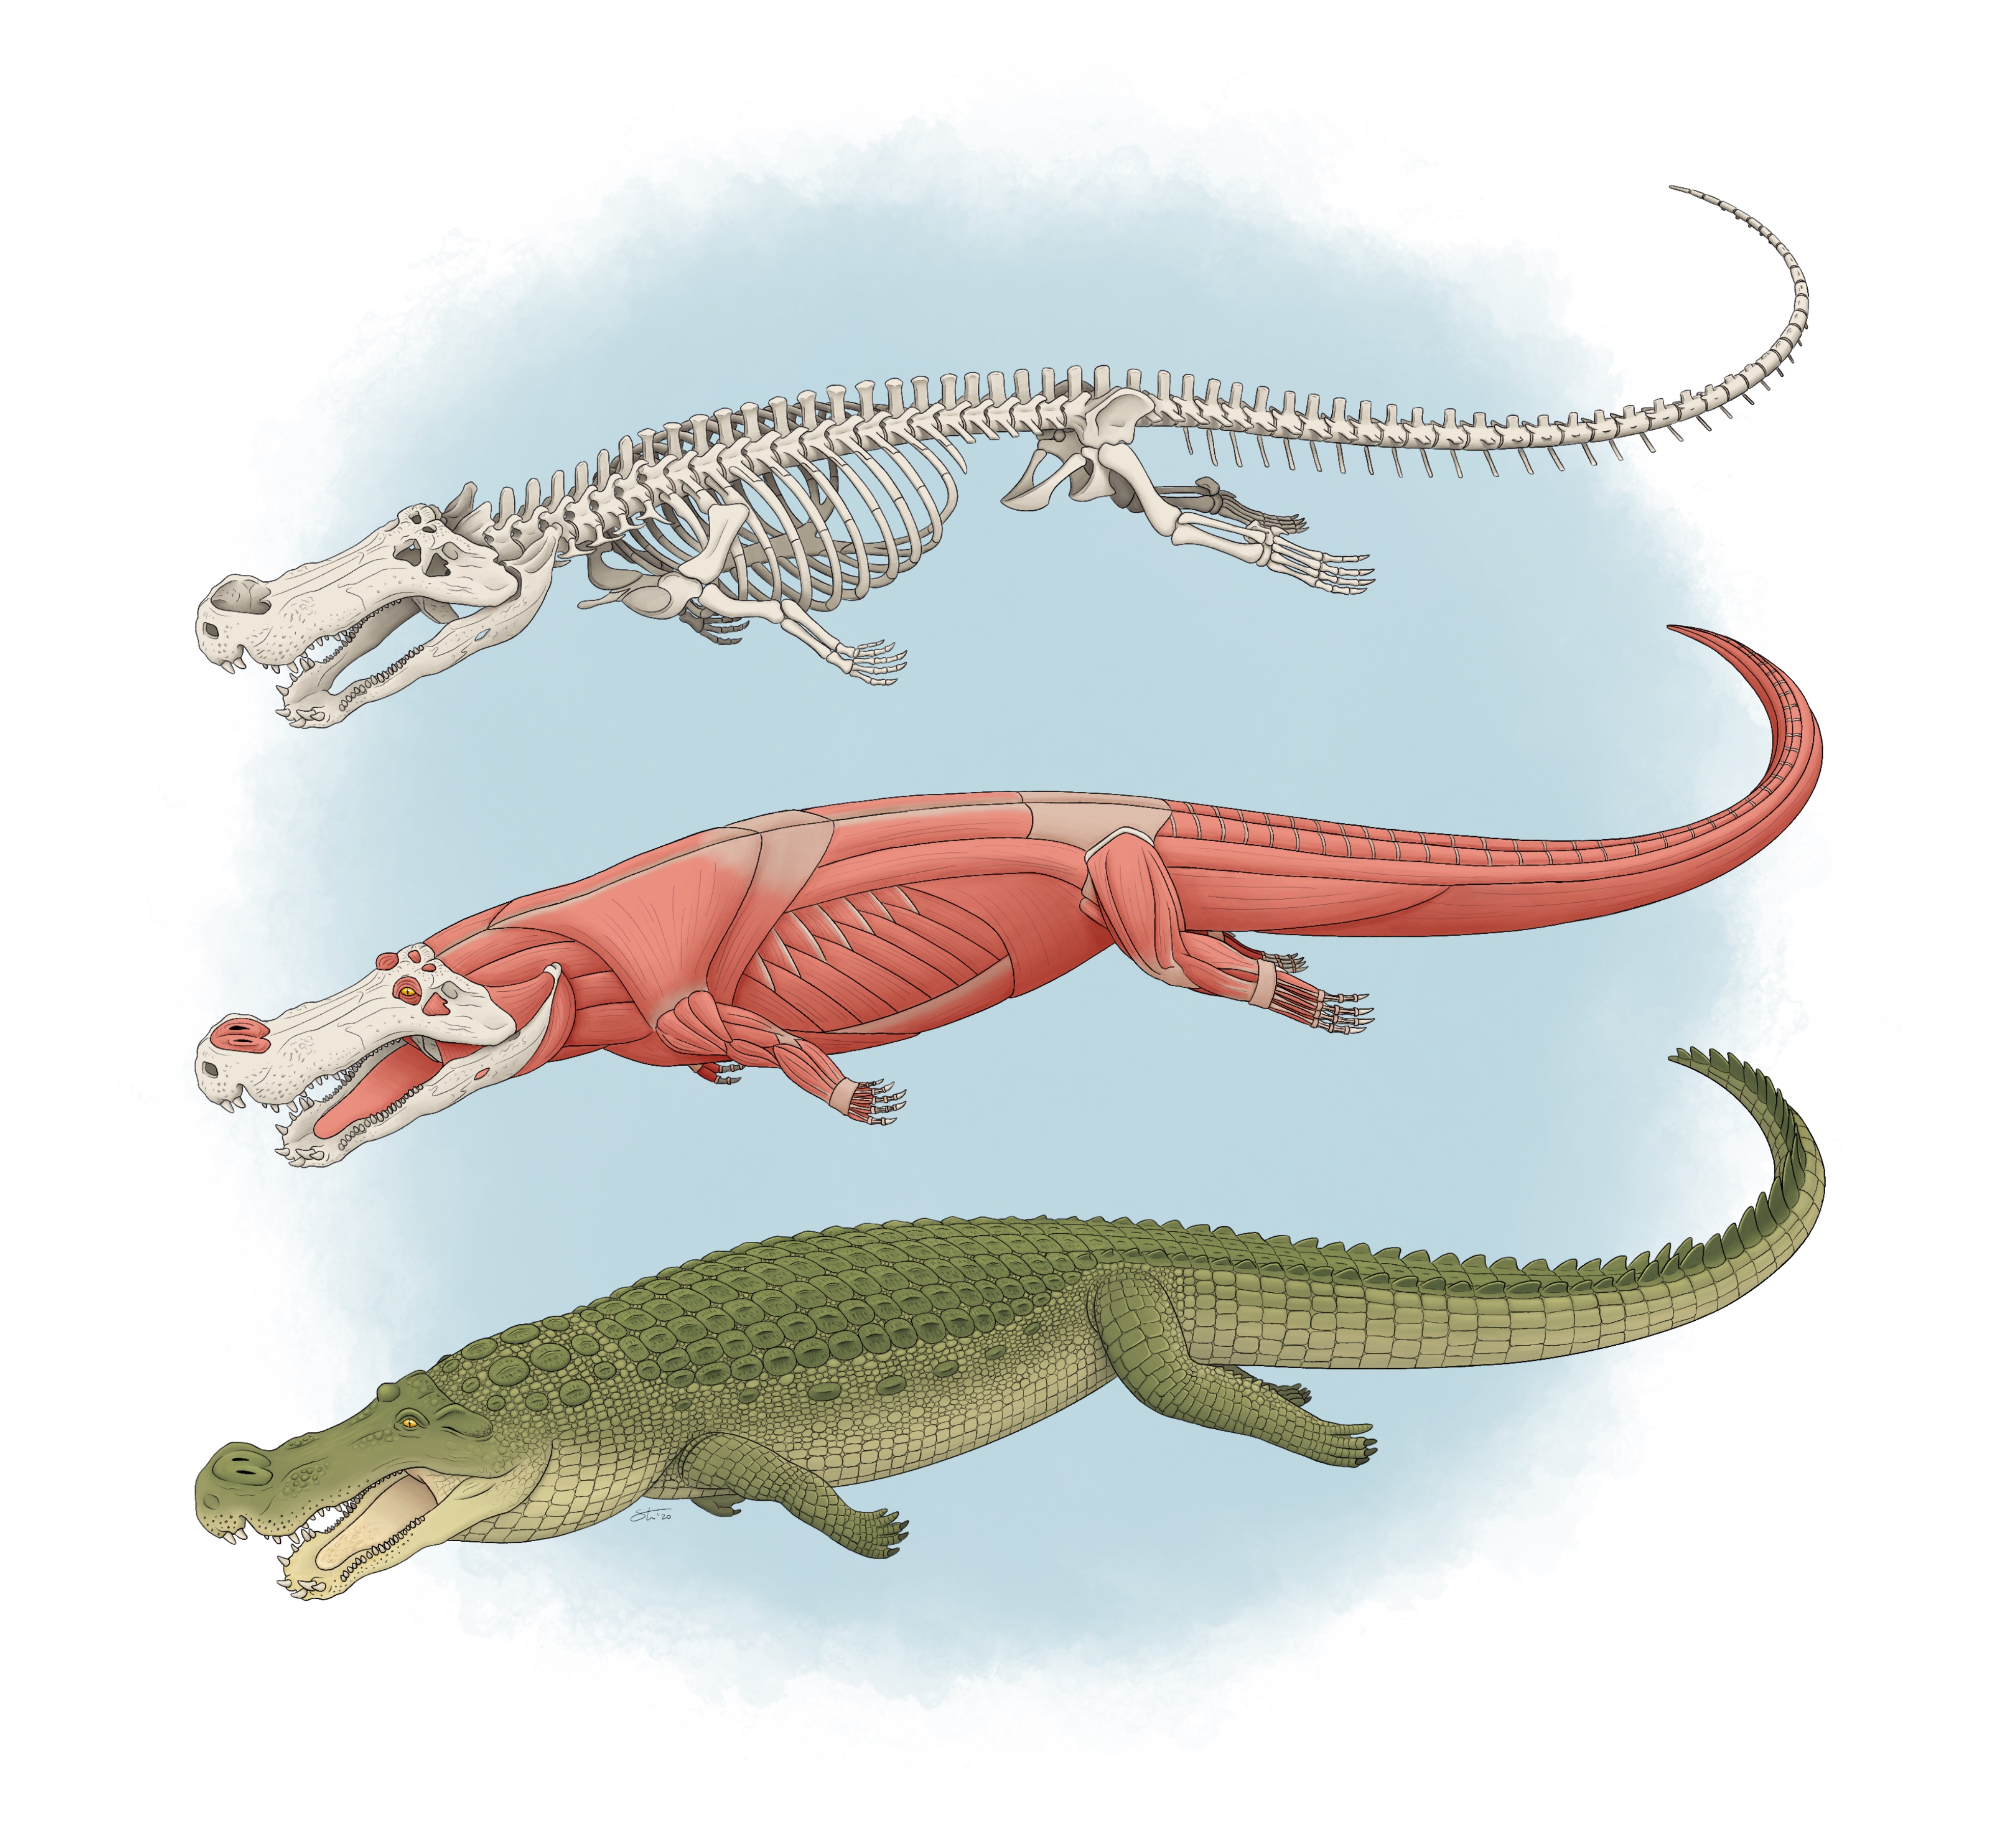 Deinoschus illustrations